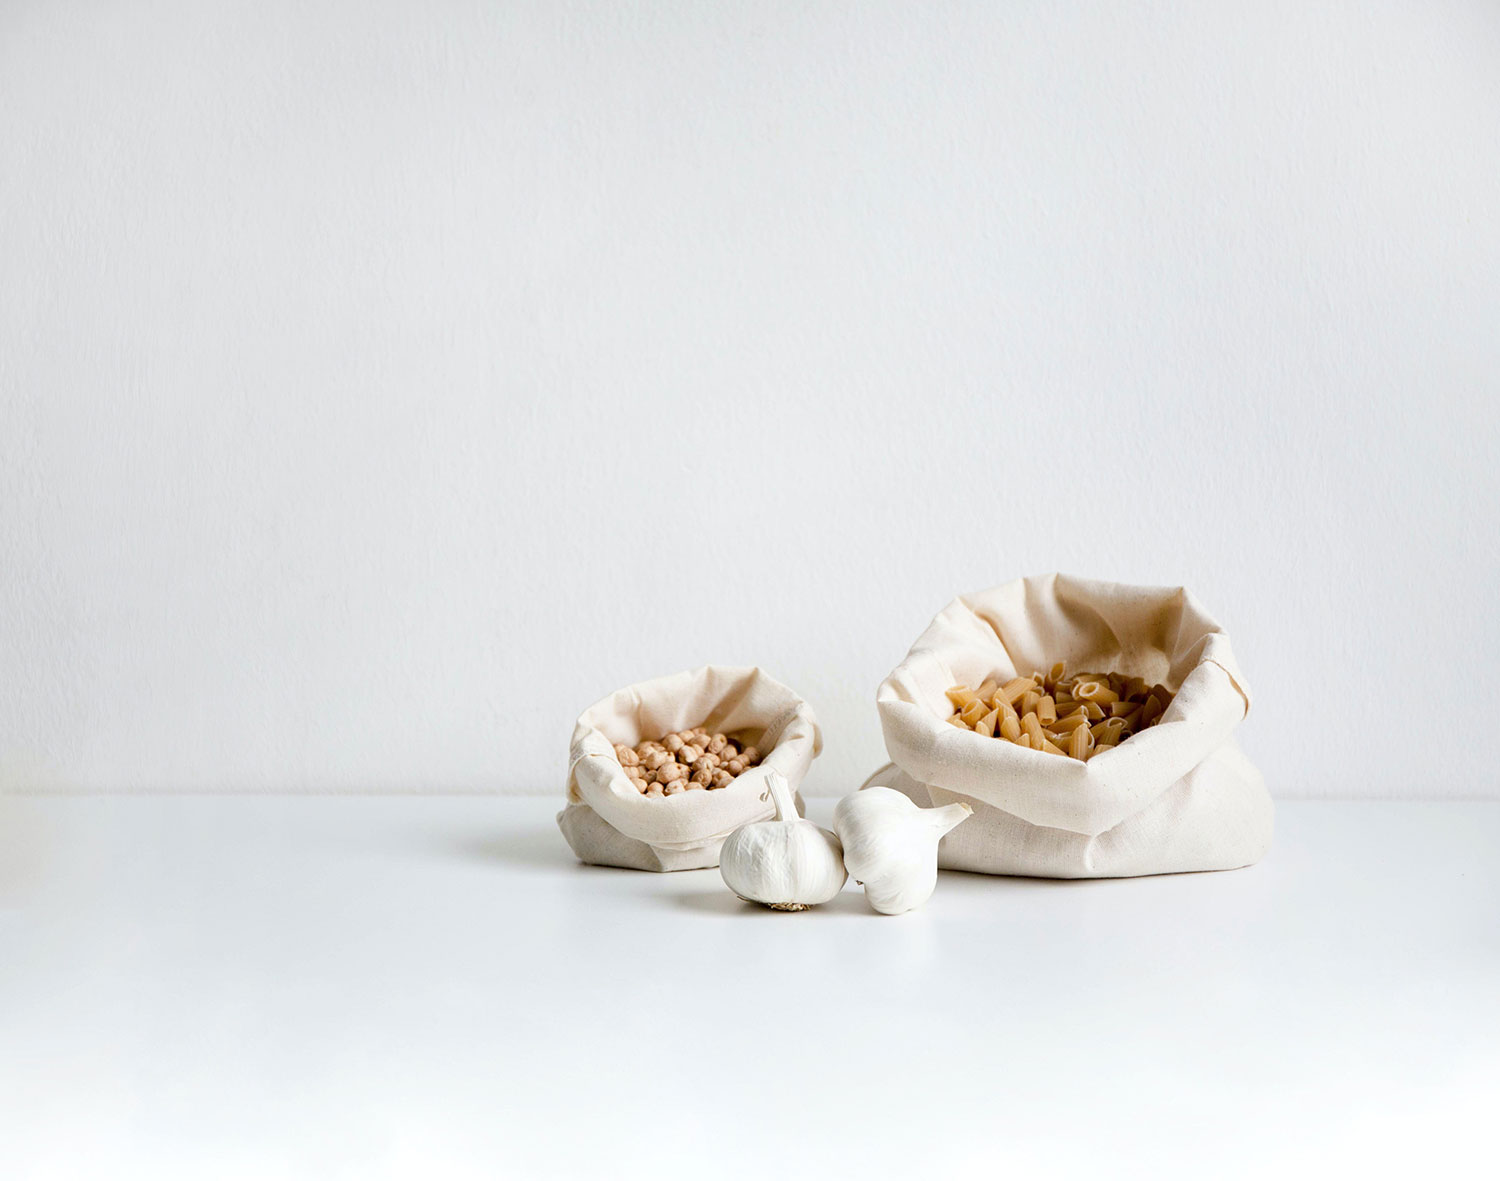 Bolsas de tela blanca con pasta y garbanzos junto con dos ajos. Poppyns Magazine